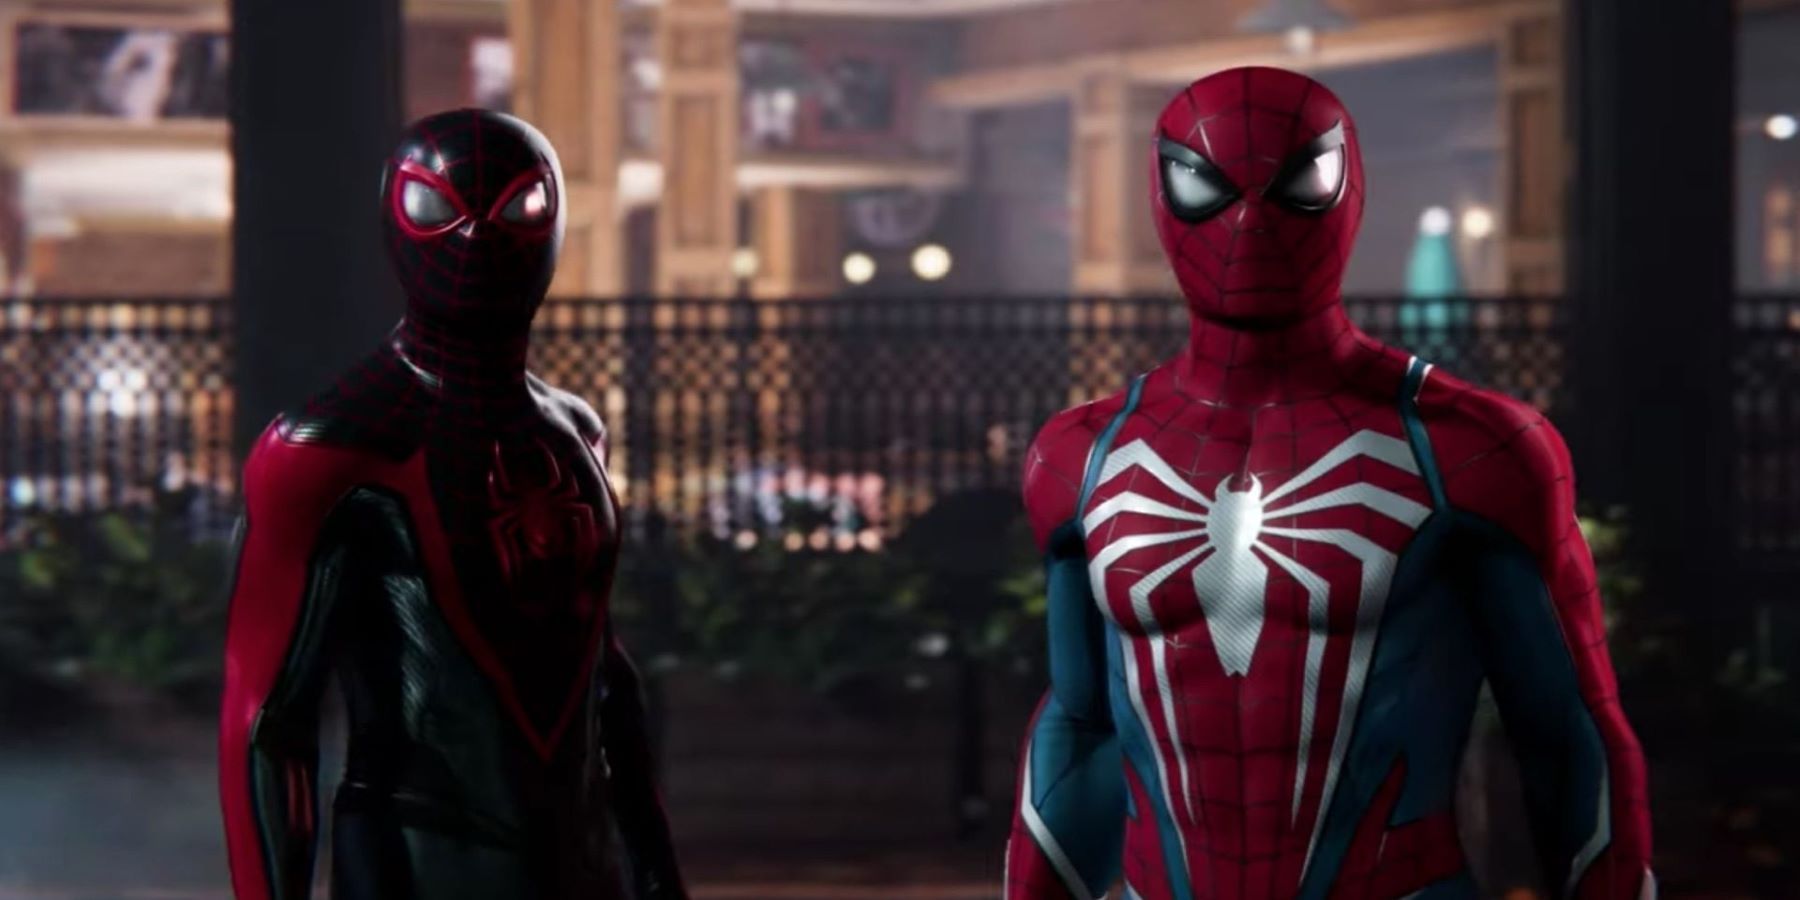 Marvel’s Spider-Man 2-ის ფანებს სურთ ნახონ “განვითარებული” სიმბიოტის კოსტუმი